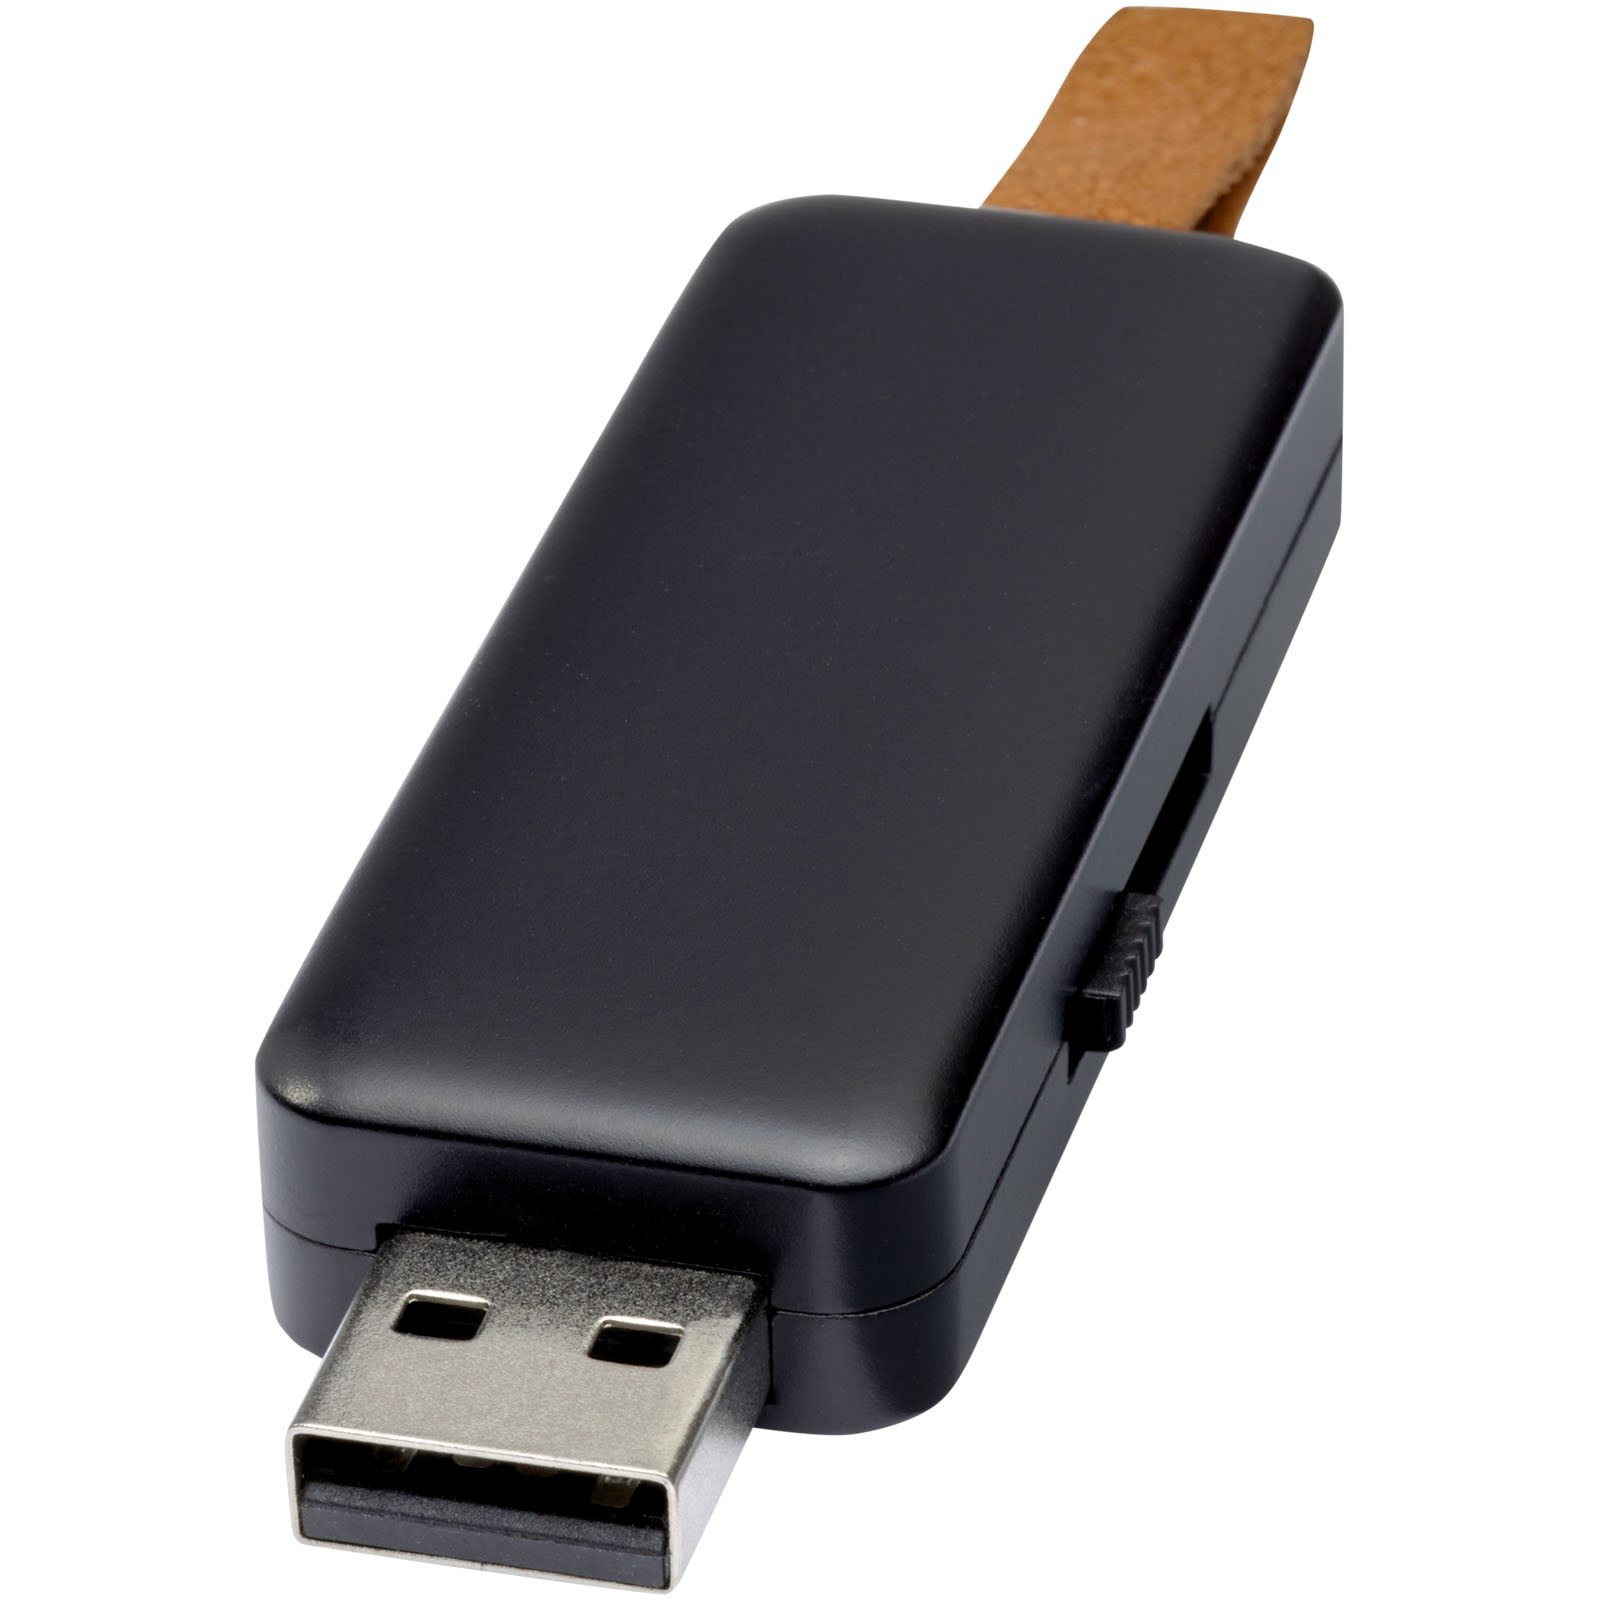 Clés USB publicitaires - Clé USB lumineuse Gleam 8 Go - 0